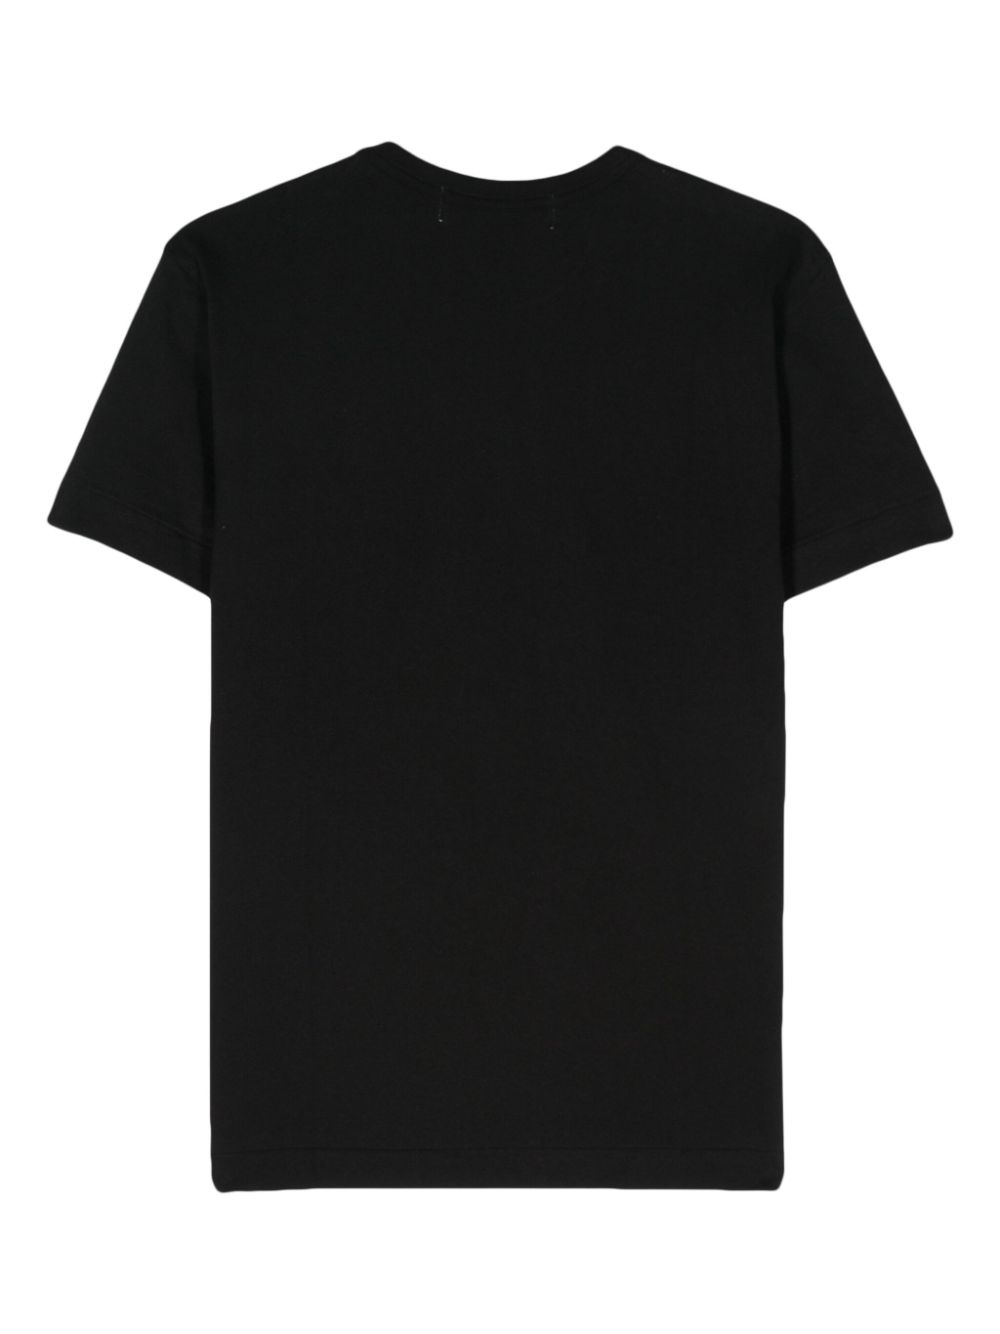 T-shirt nera texture jersey di cotone